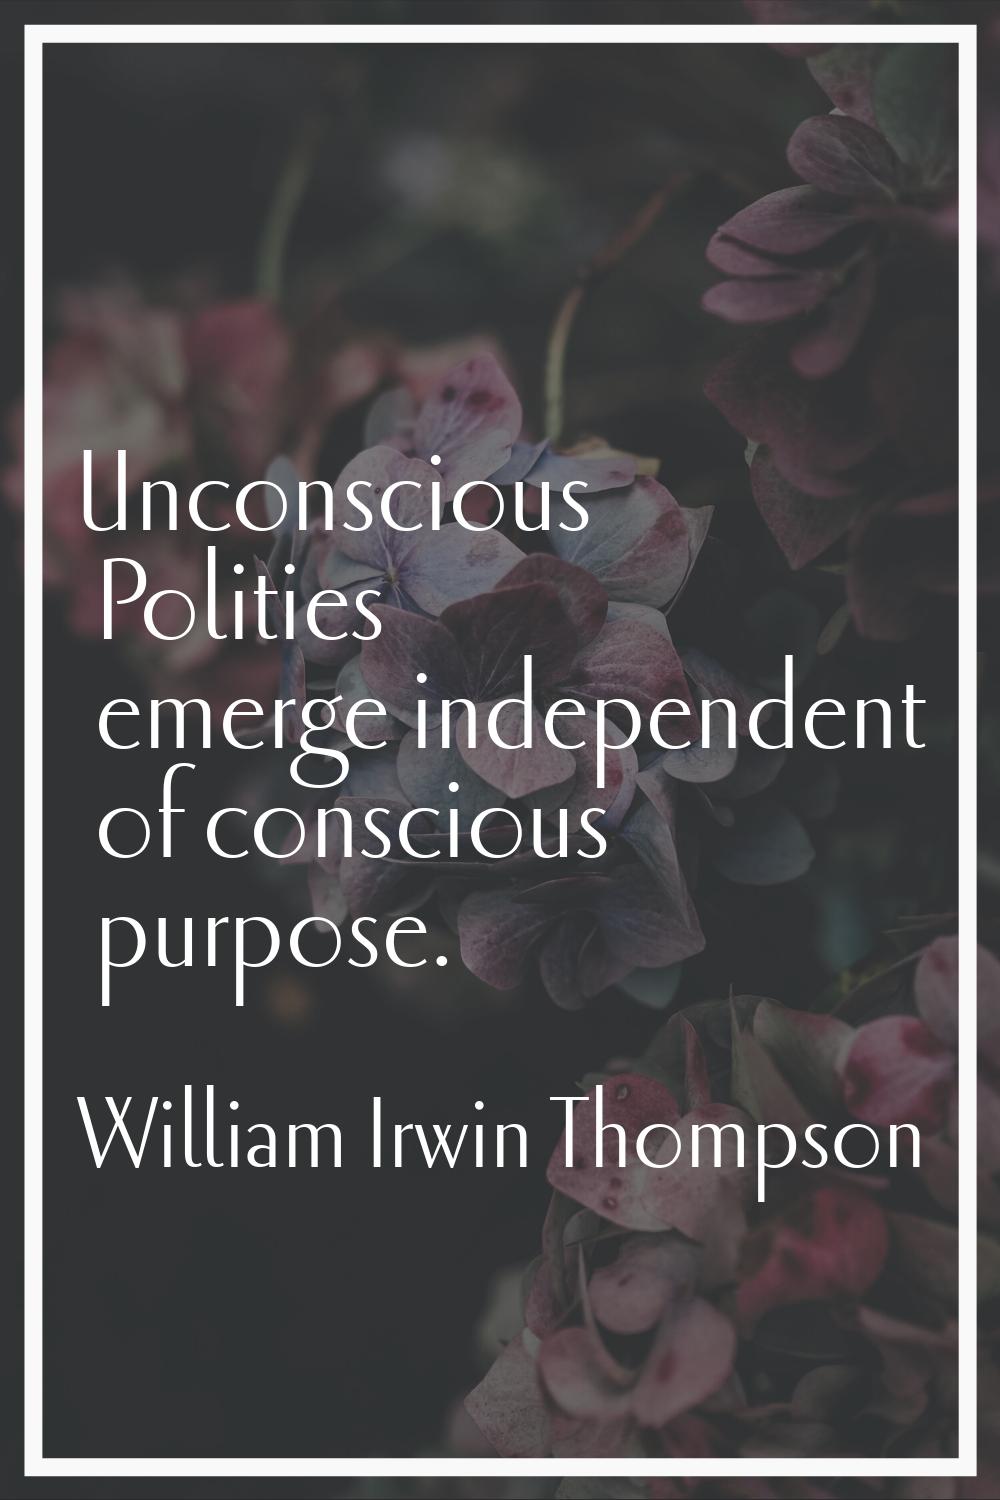 Unconscious Polities emerge independent of conscious purpose.